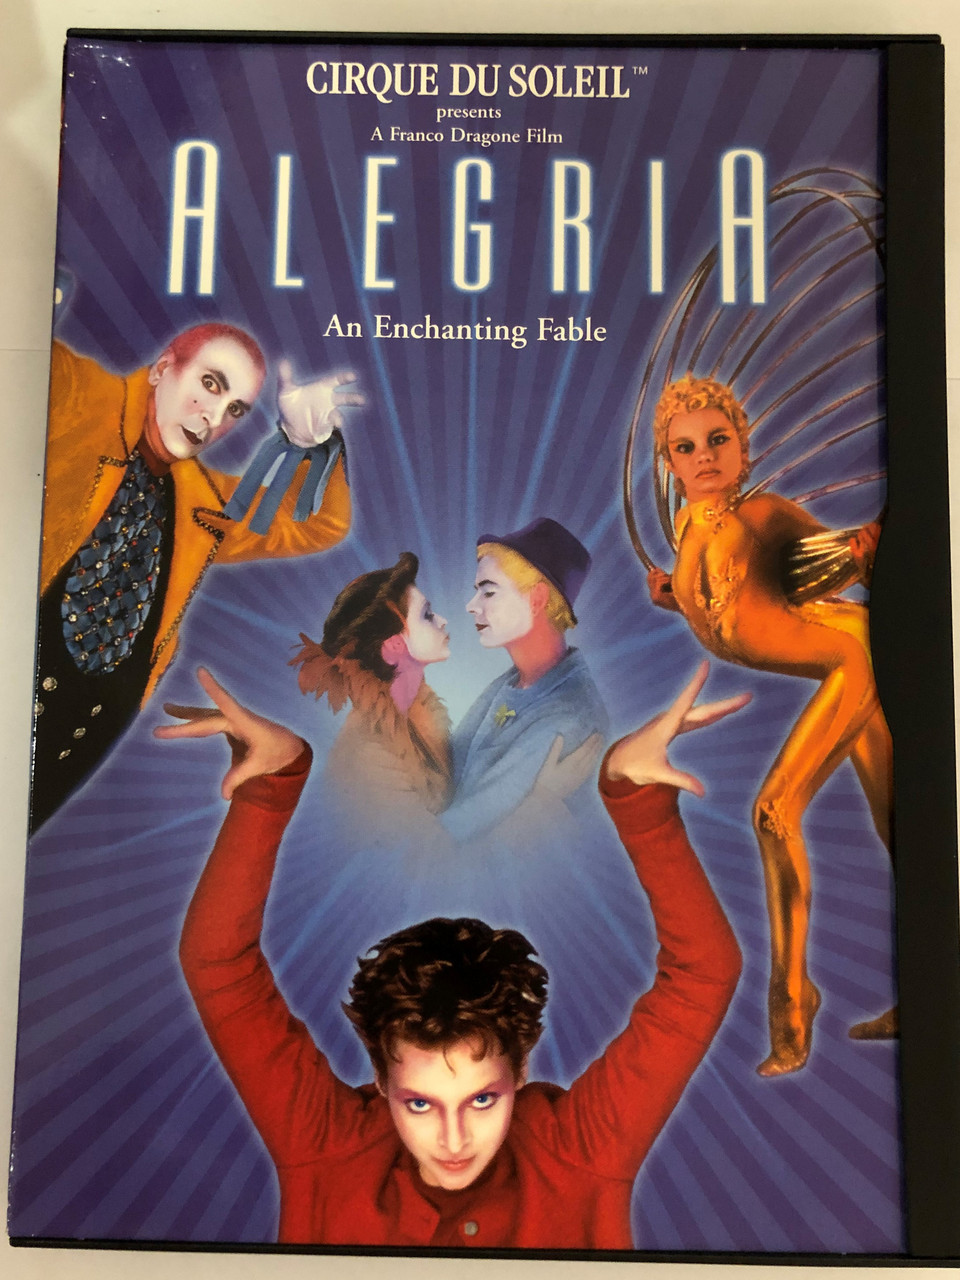 Cirque du Soleil presents - Alegria - An enchanting Fable DVD 1998 /  Directed by y Franco Dragone / Starring: Frank Langella, Mako, Julie Cox,  René Bazinet, Whoopi Goldberg - Bible in My Language